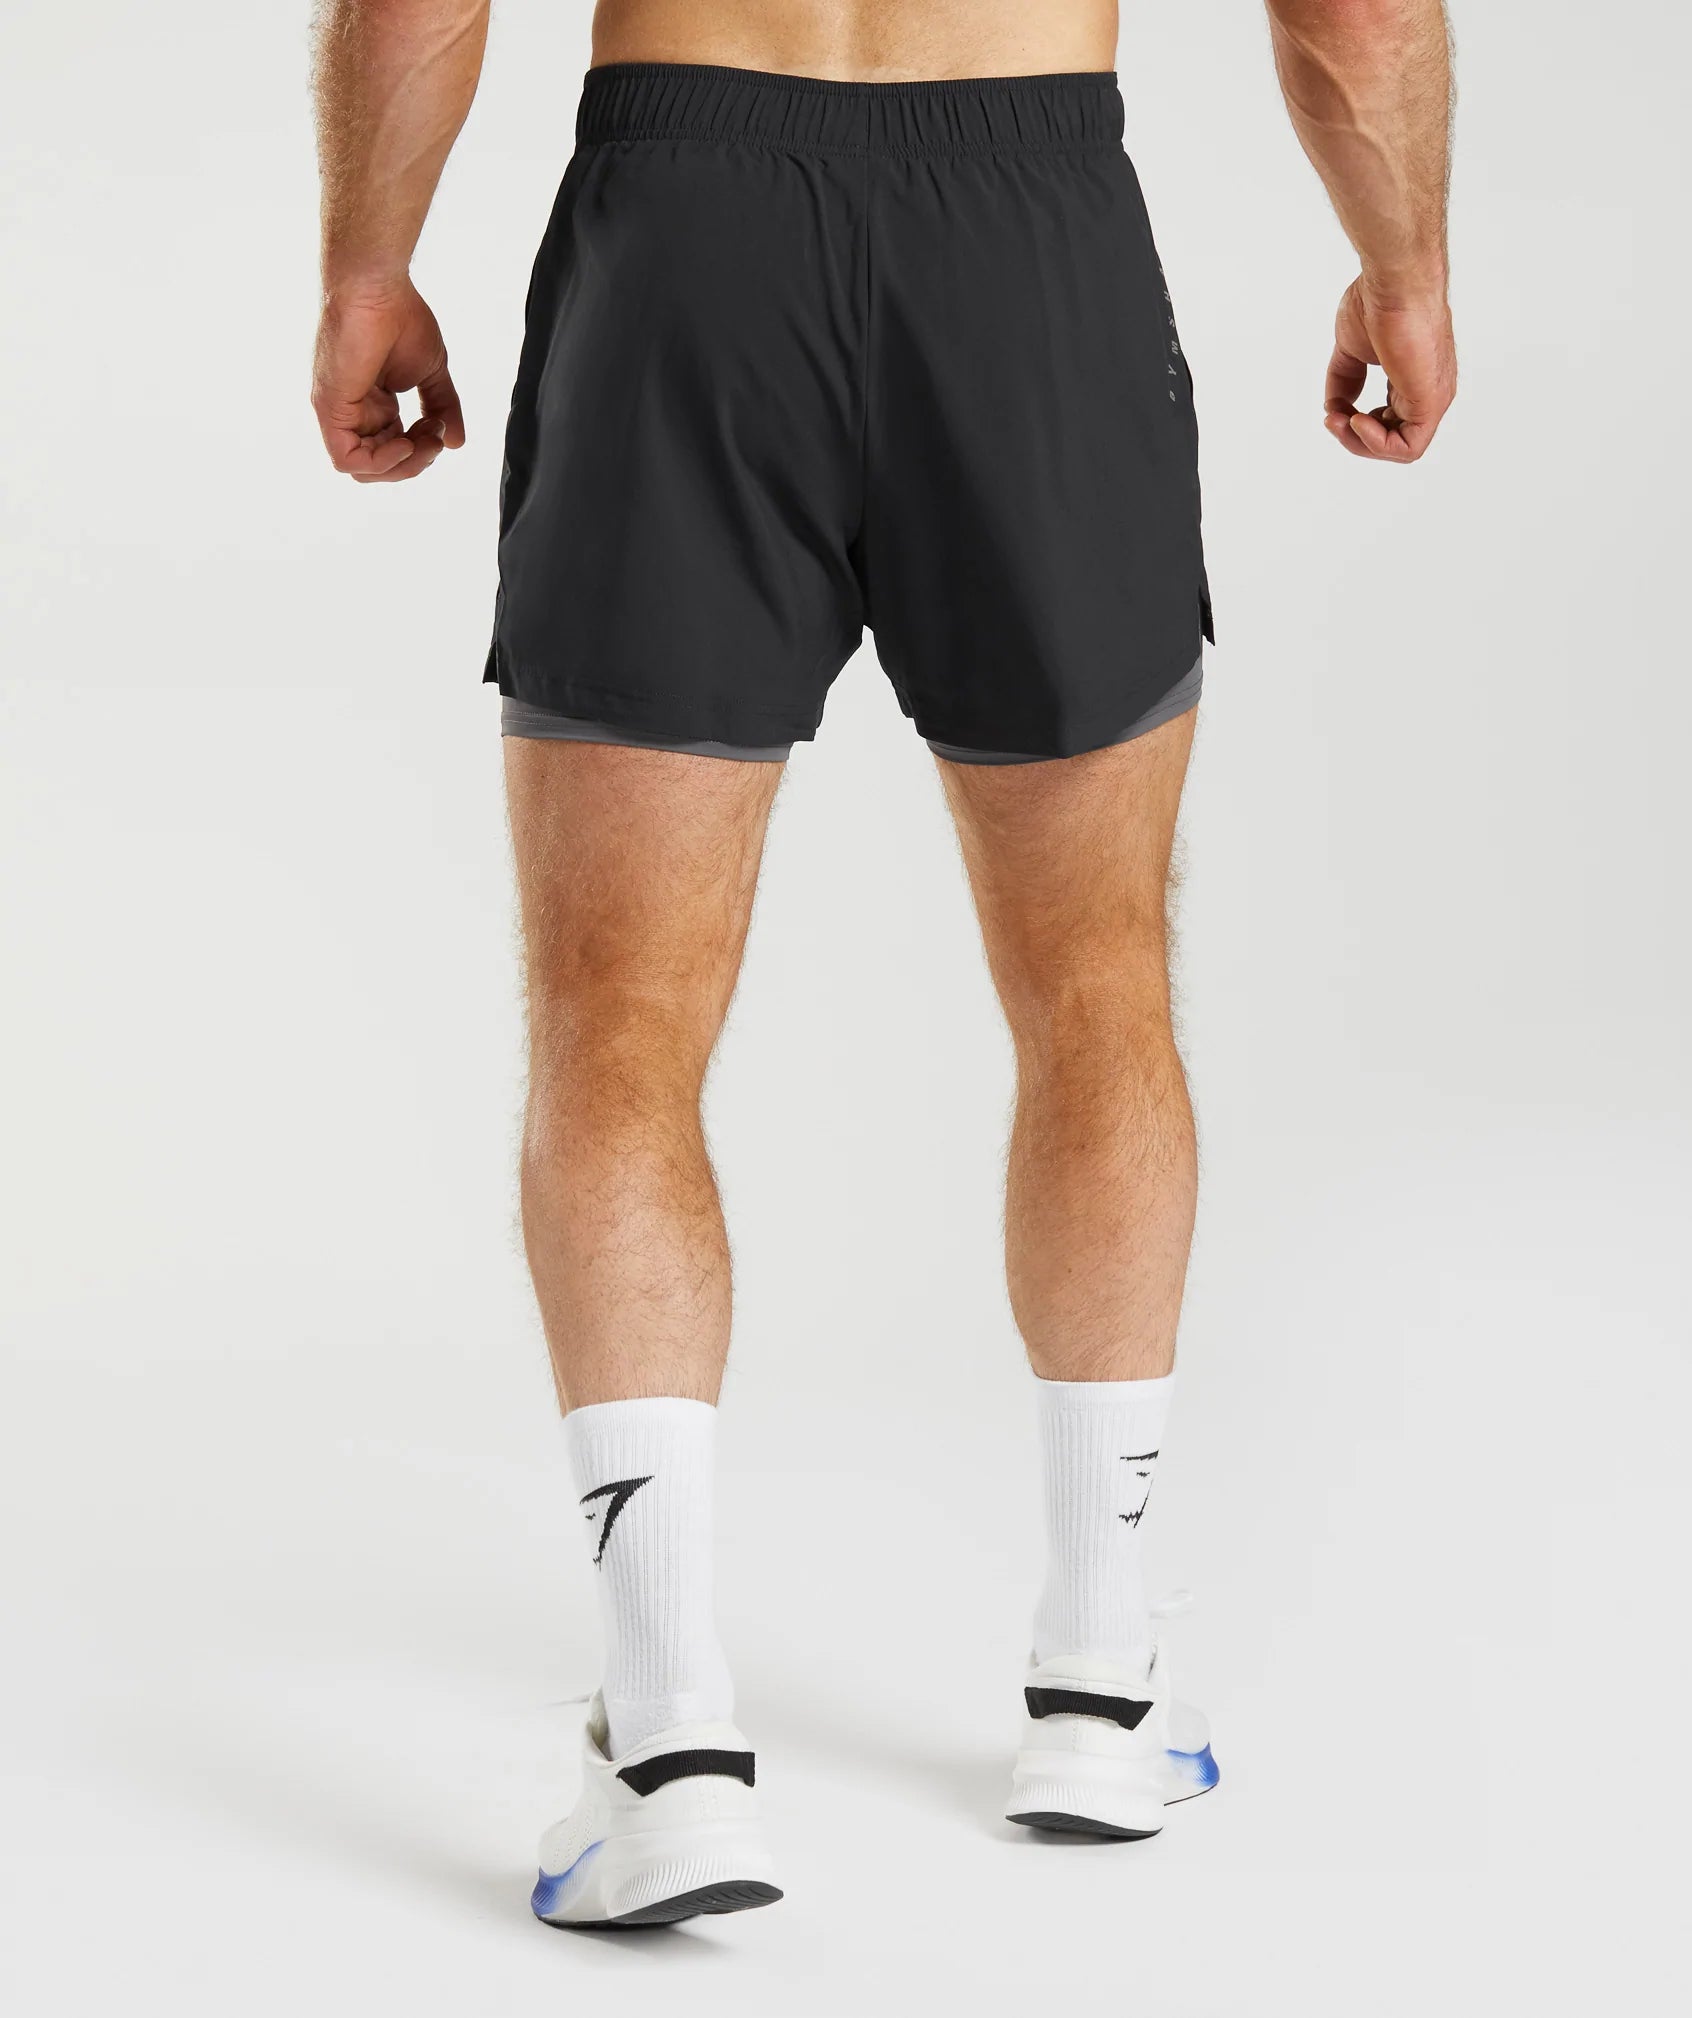 Sports Shorts for Men Post Surgery Tearaway Pants Color Block